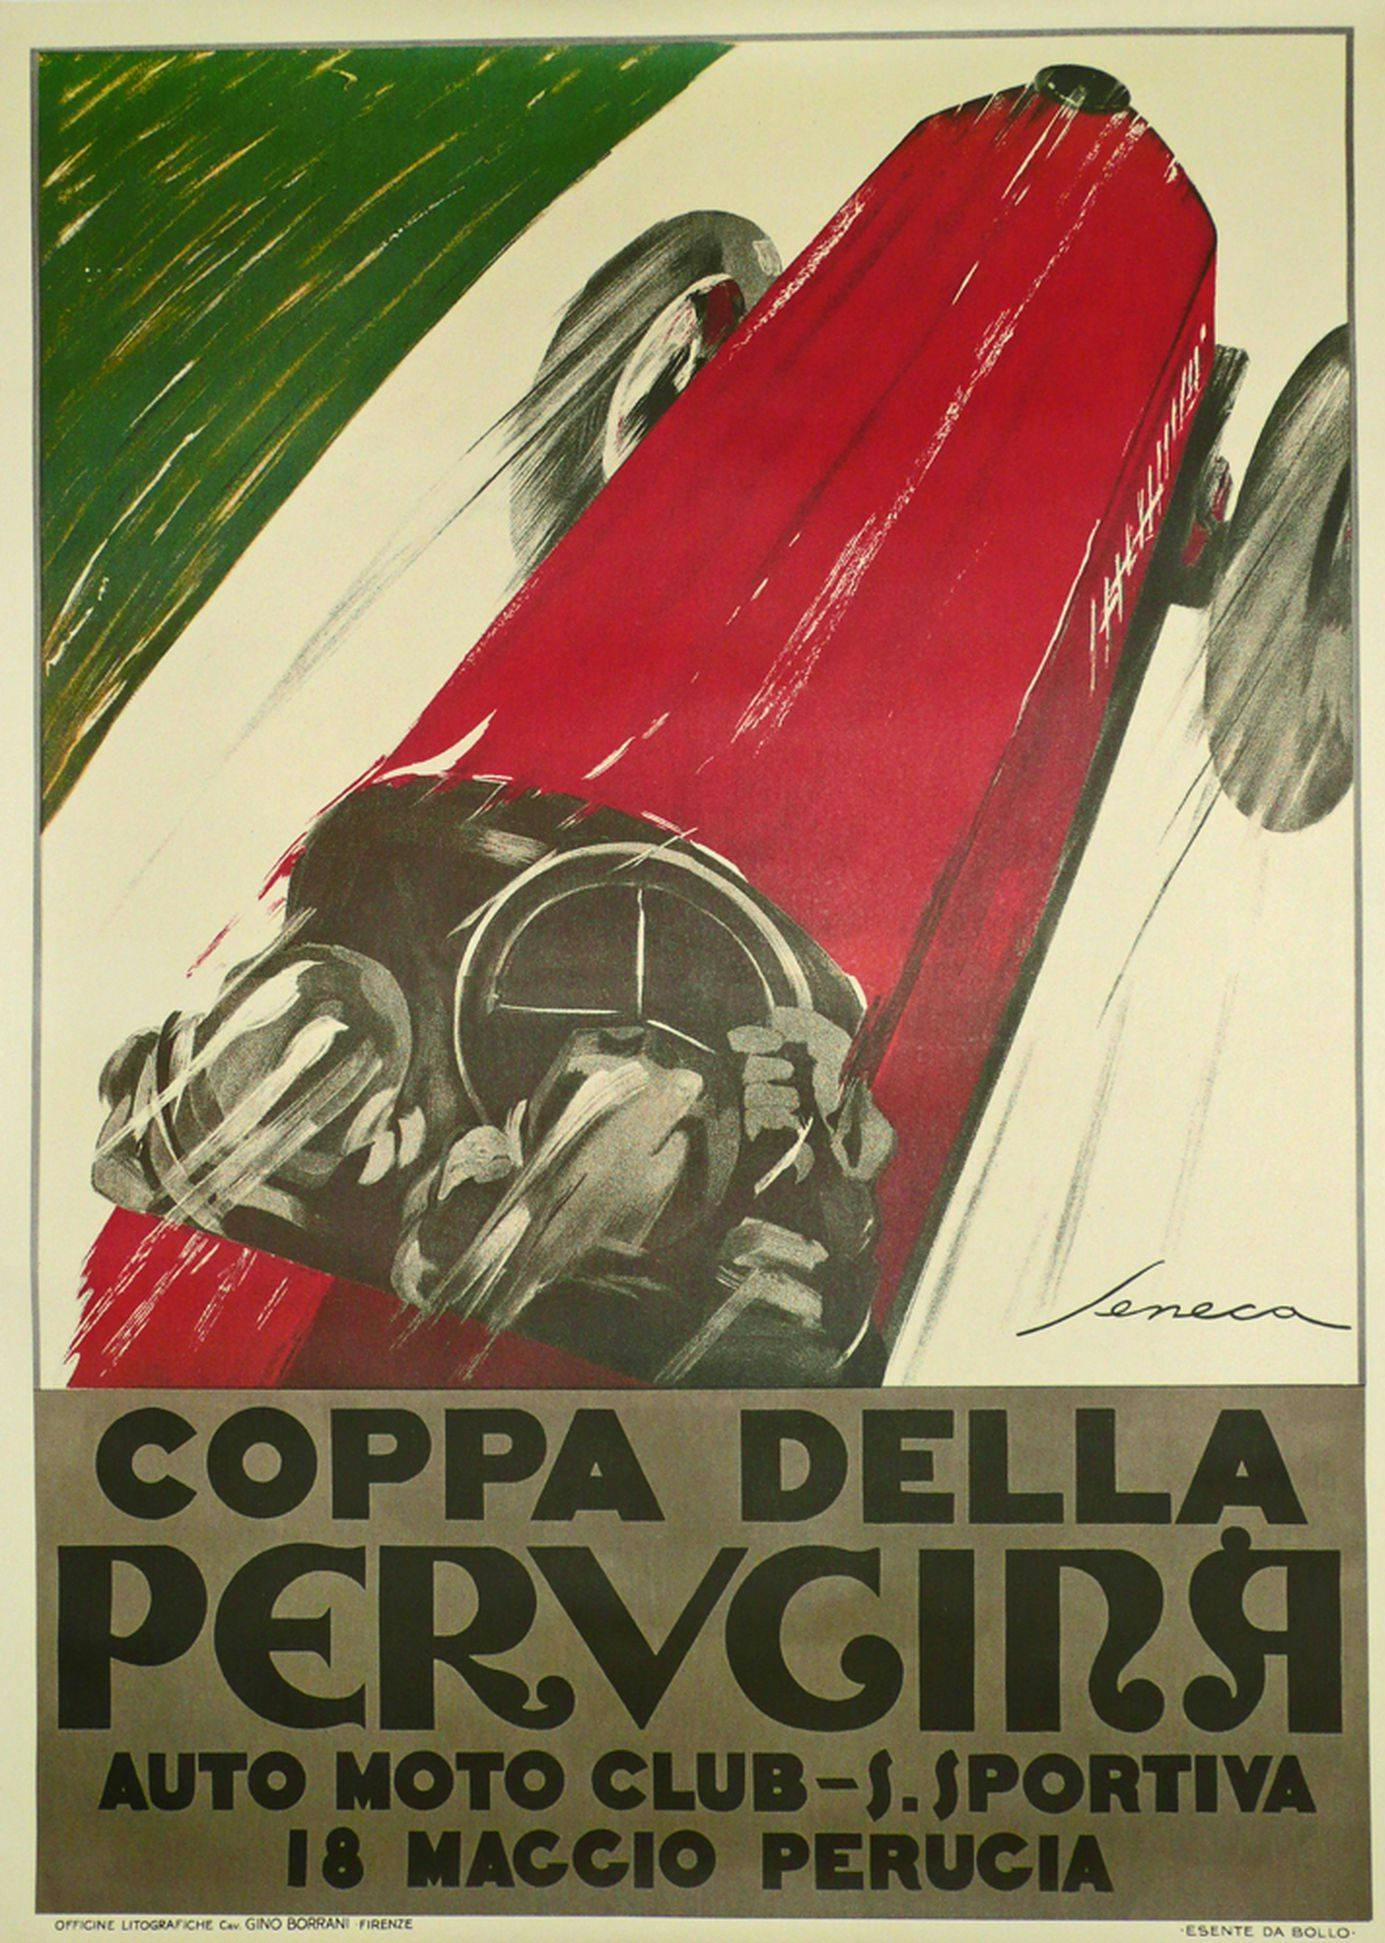 Coppa Della vintage movie poster